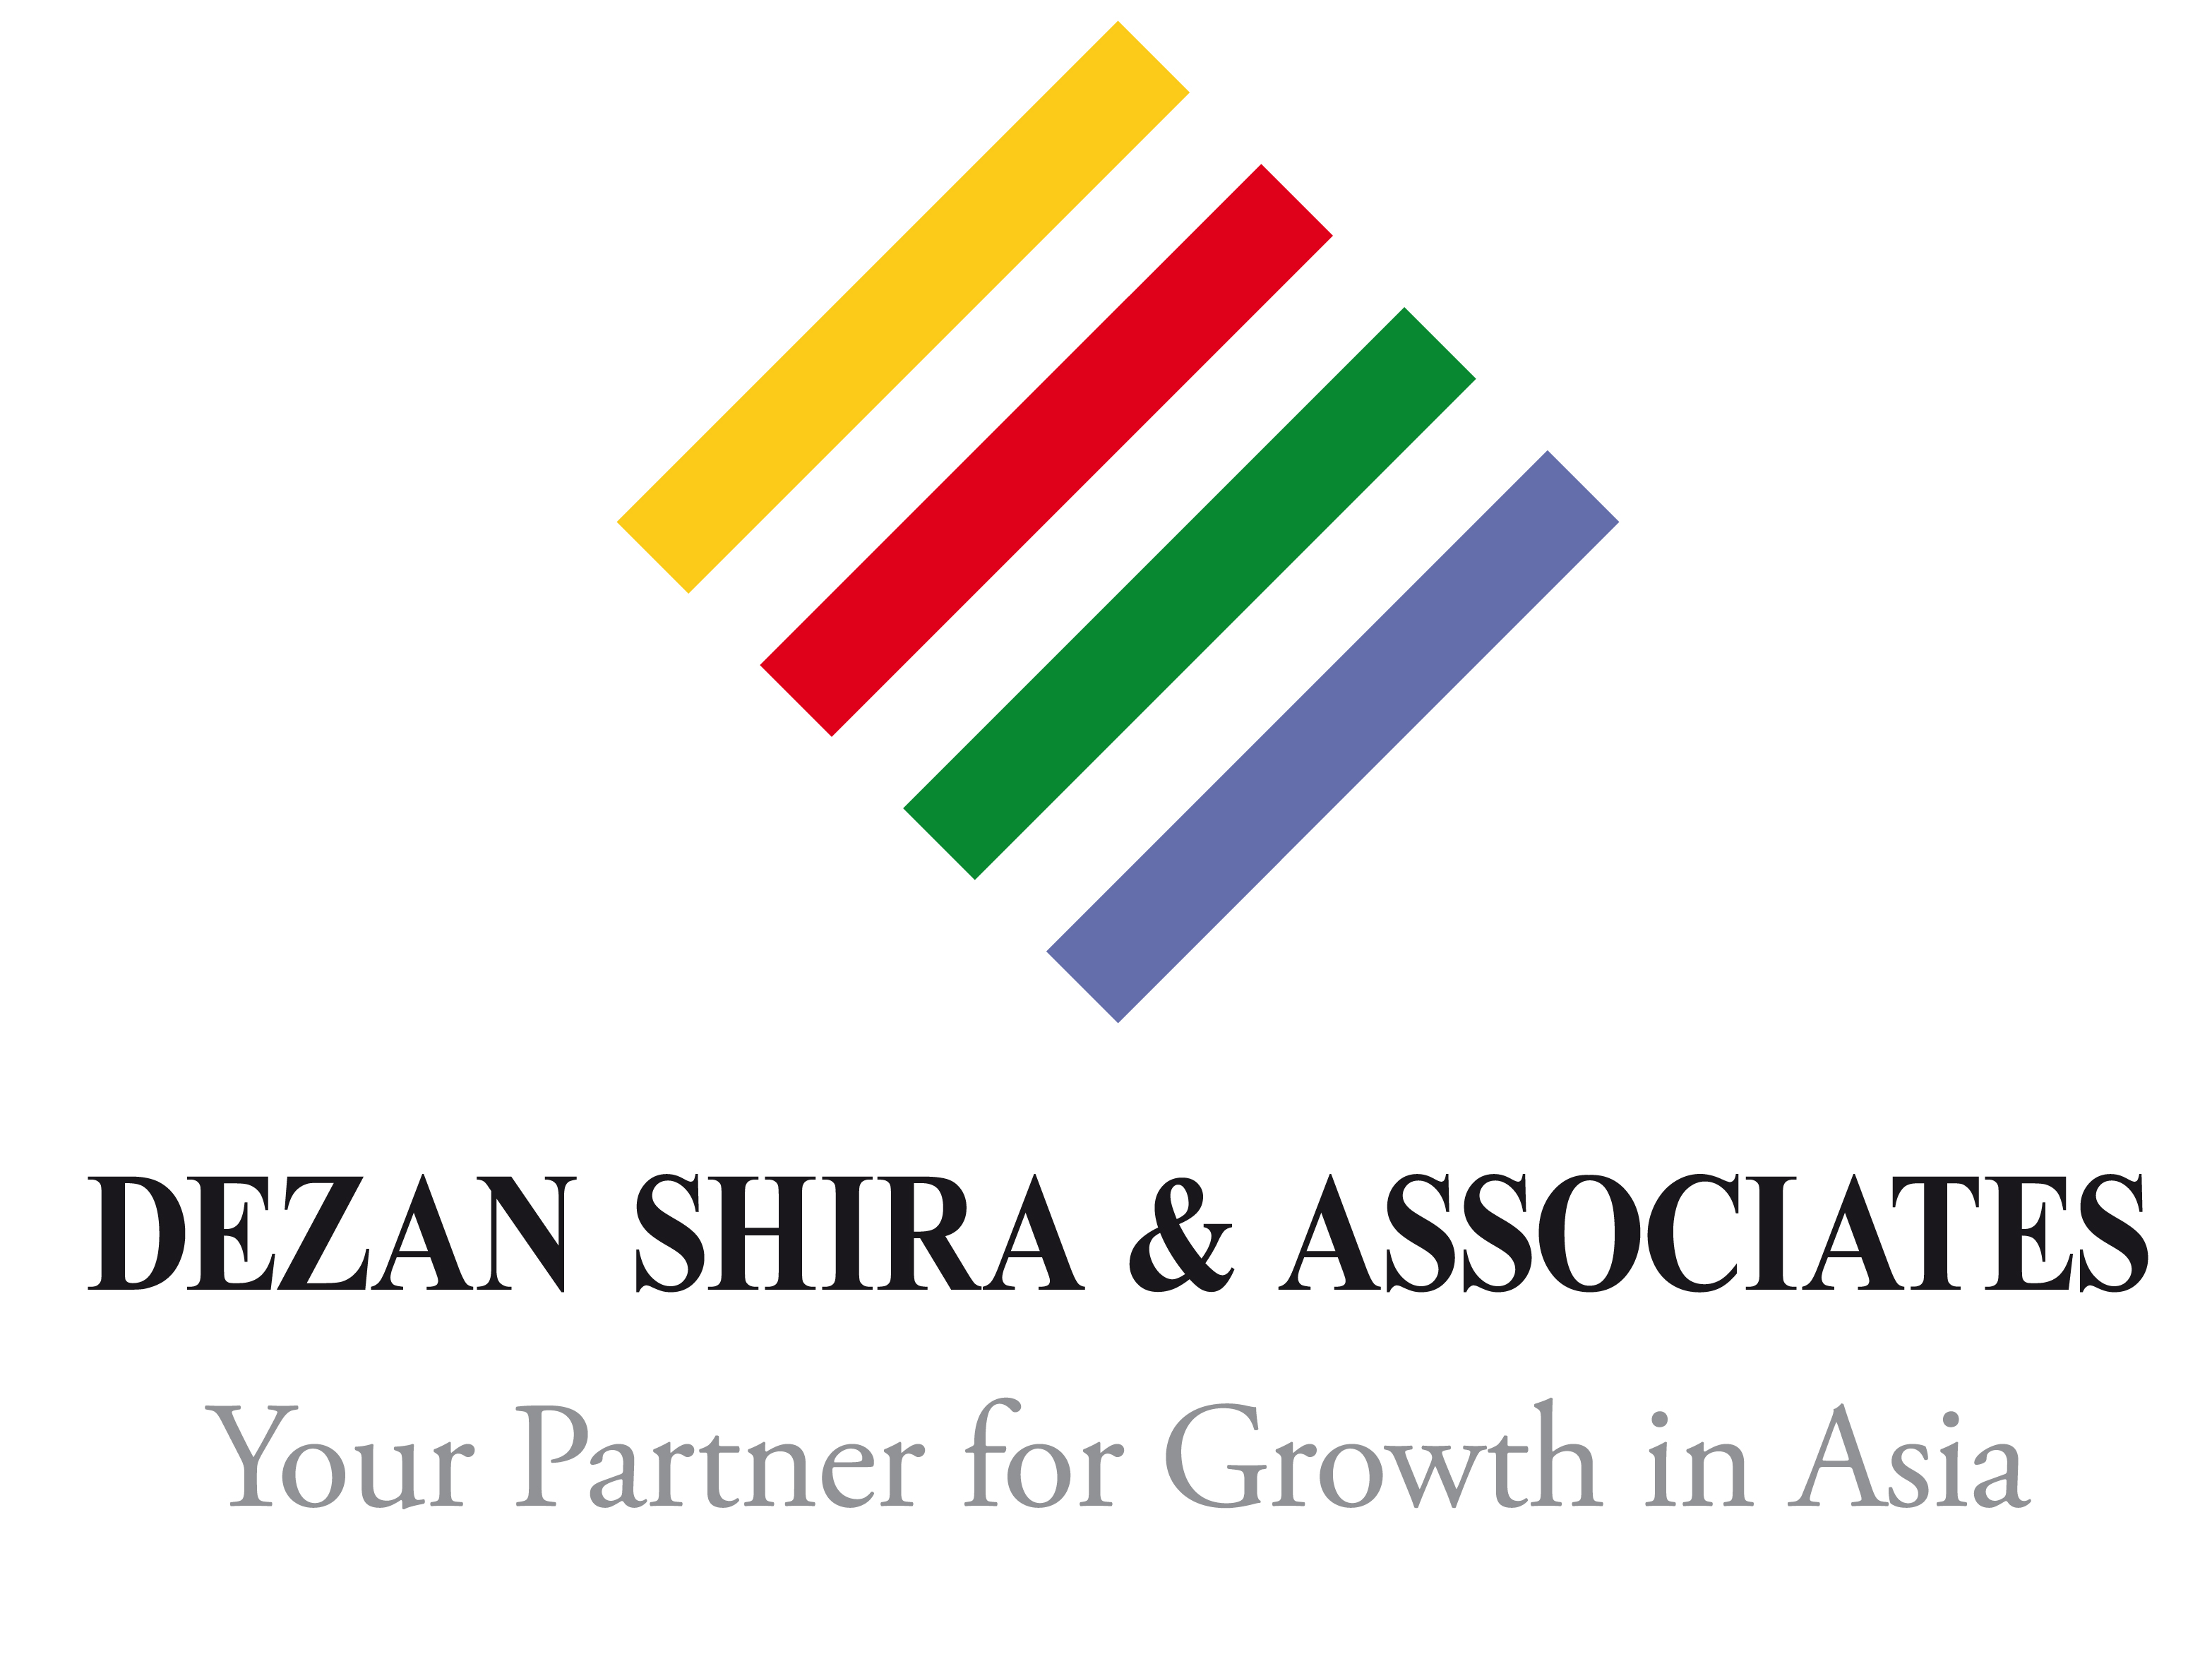 Dezan Shira & Associates (Asia Briefing)